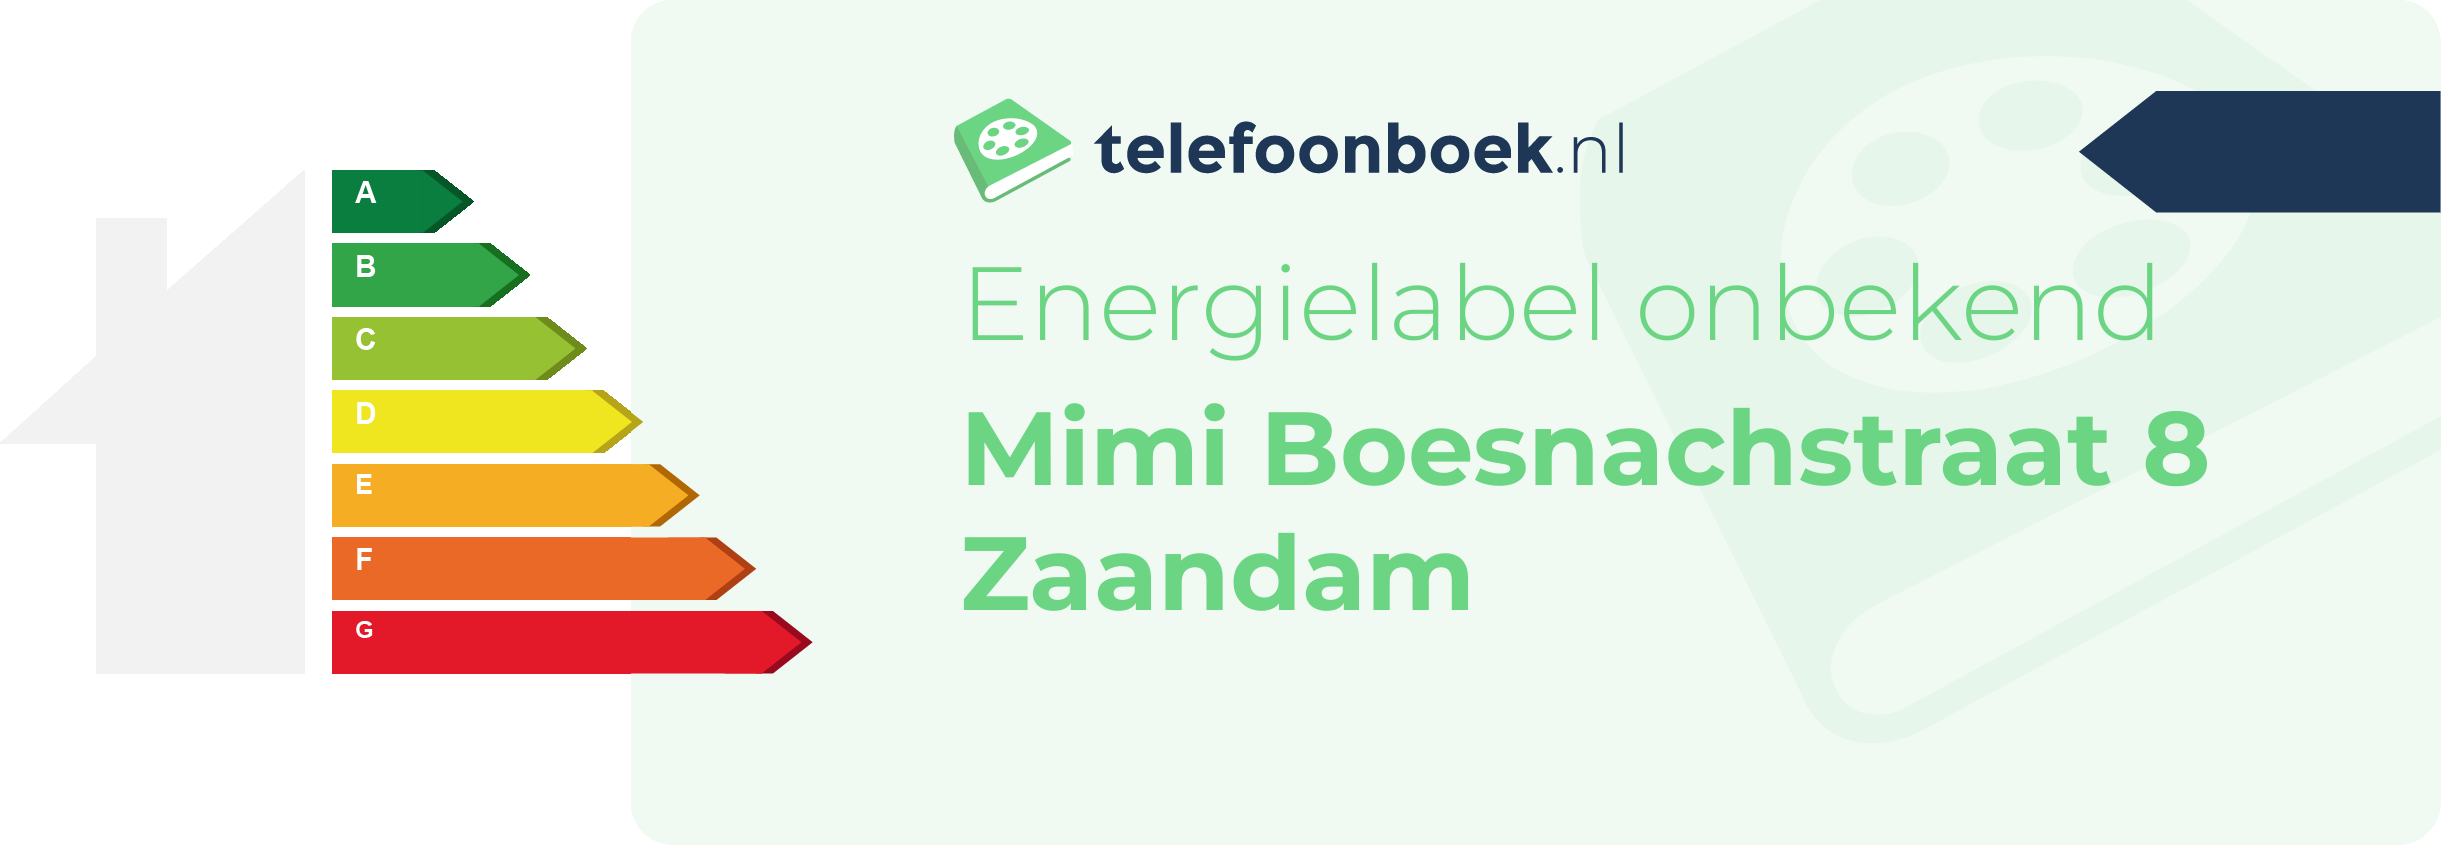 Energielabel Mimi Boesnachstraat 8 Zaandam